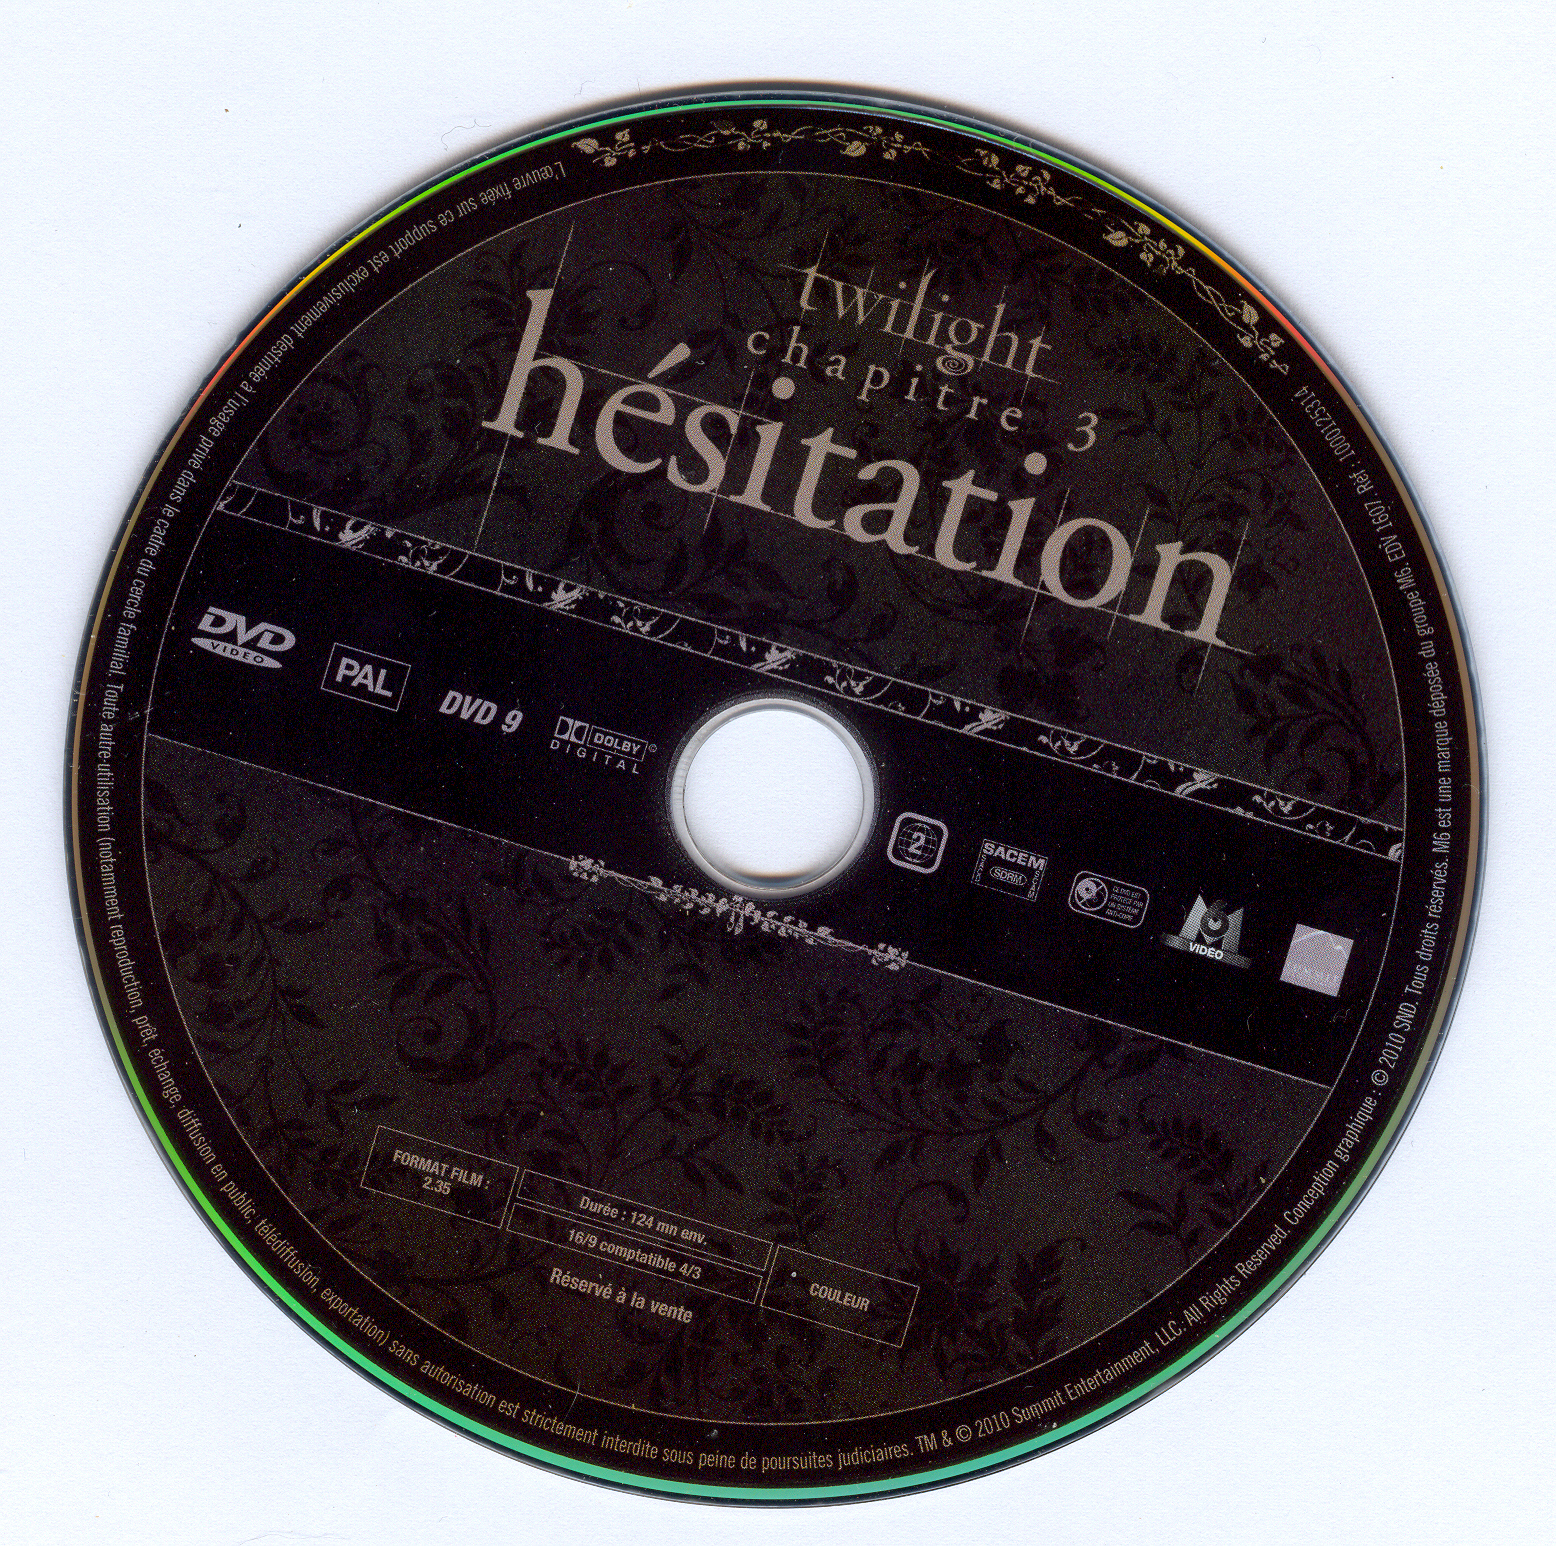 Twilight Chapitre 3 - Hesitation